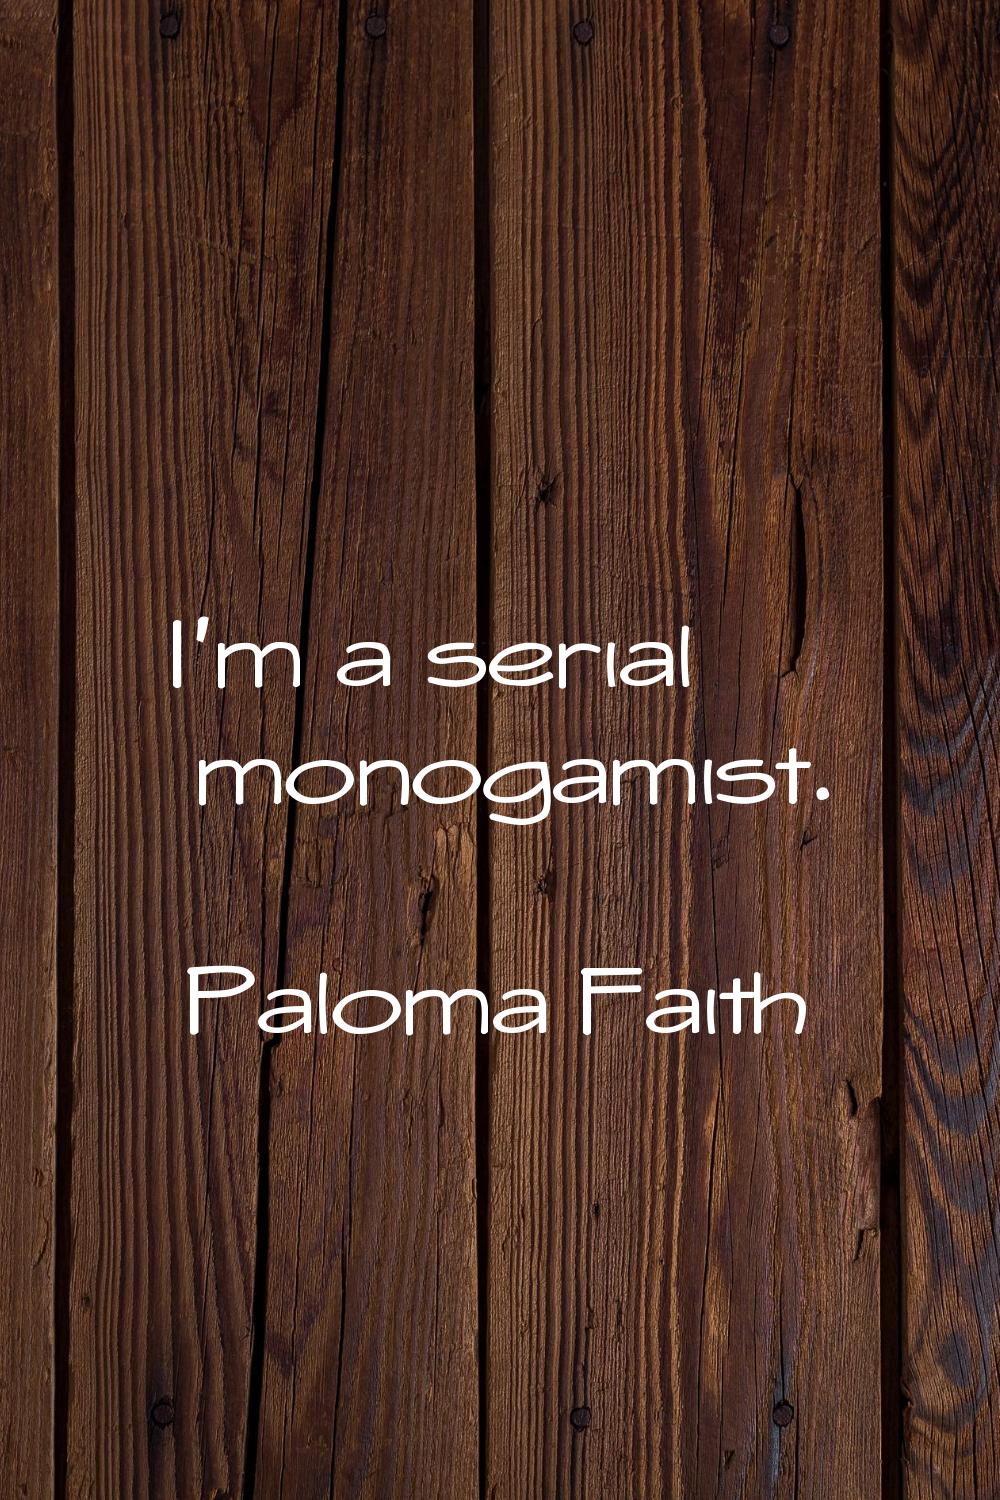 I'm a serial monogamist.